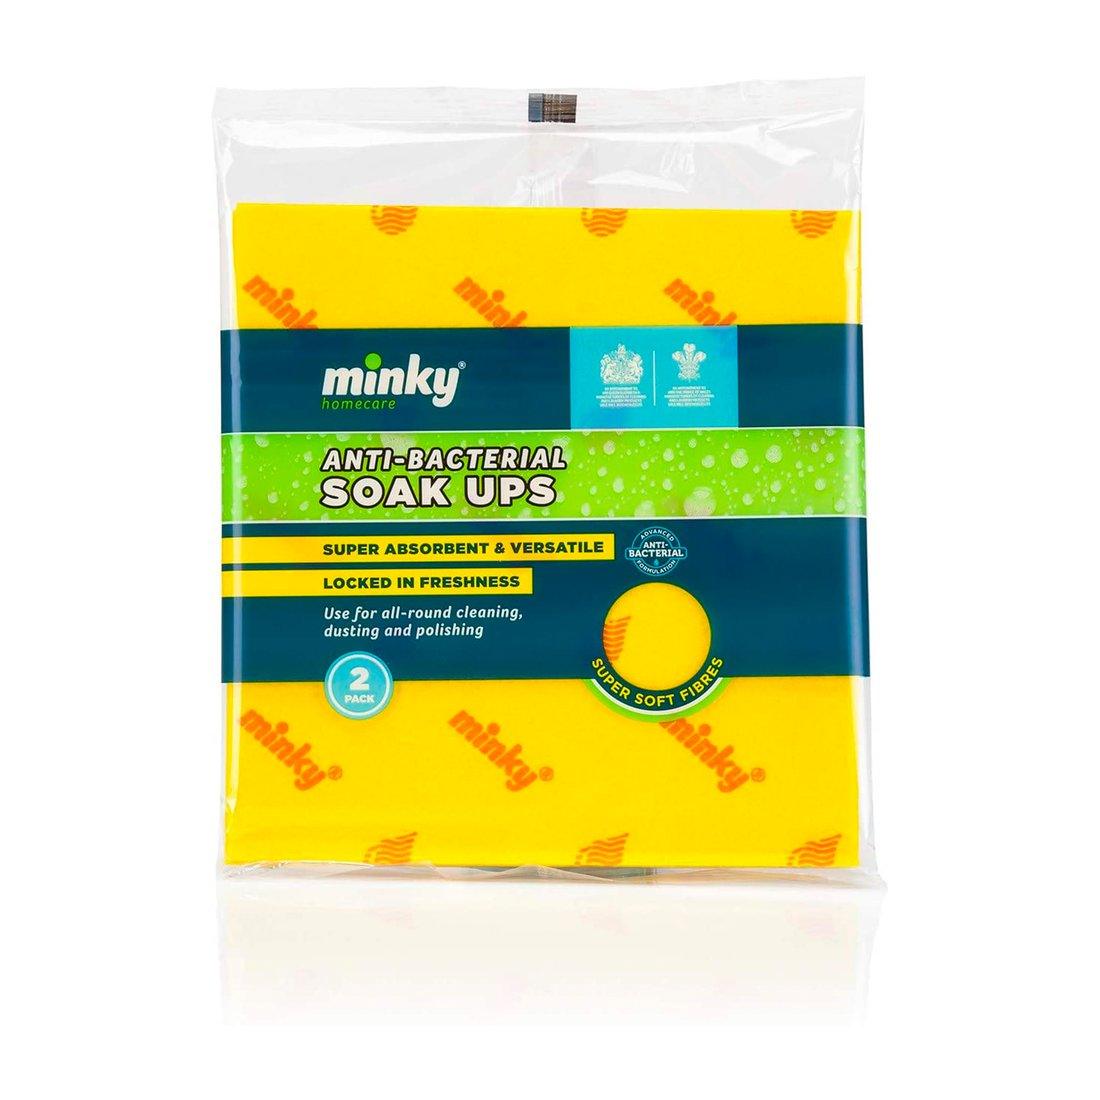 Minky Anti-Bacterial Soak Ups 2pk - Vending Superstore